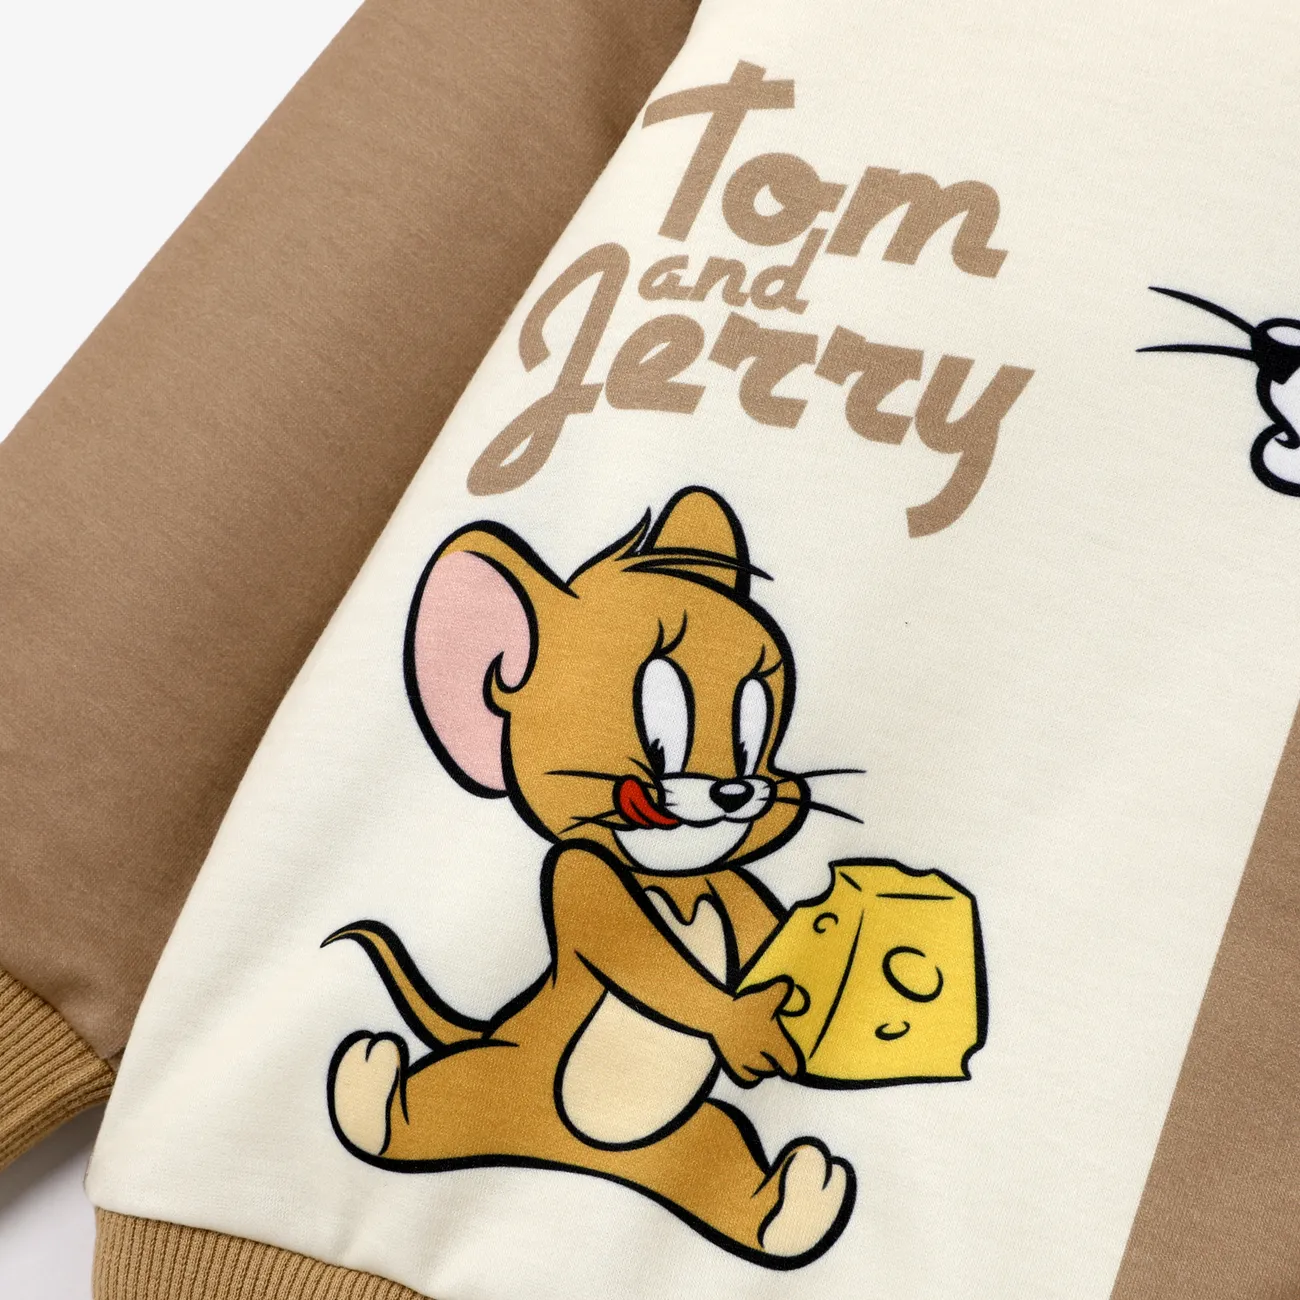 Tom and Jerry 小童 男 童趣 卫衣套裝 彩色 big image 1